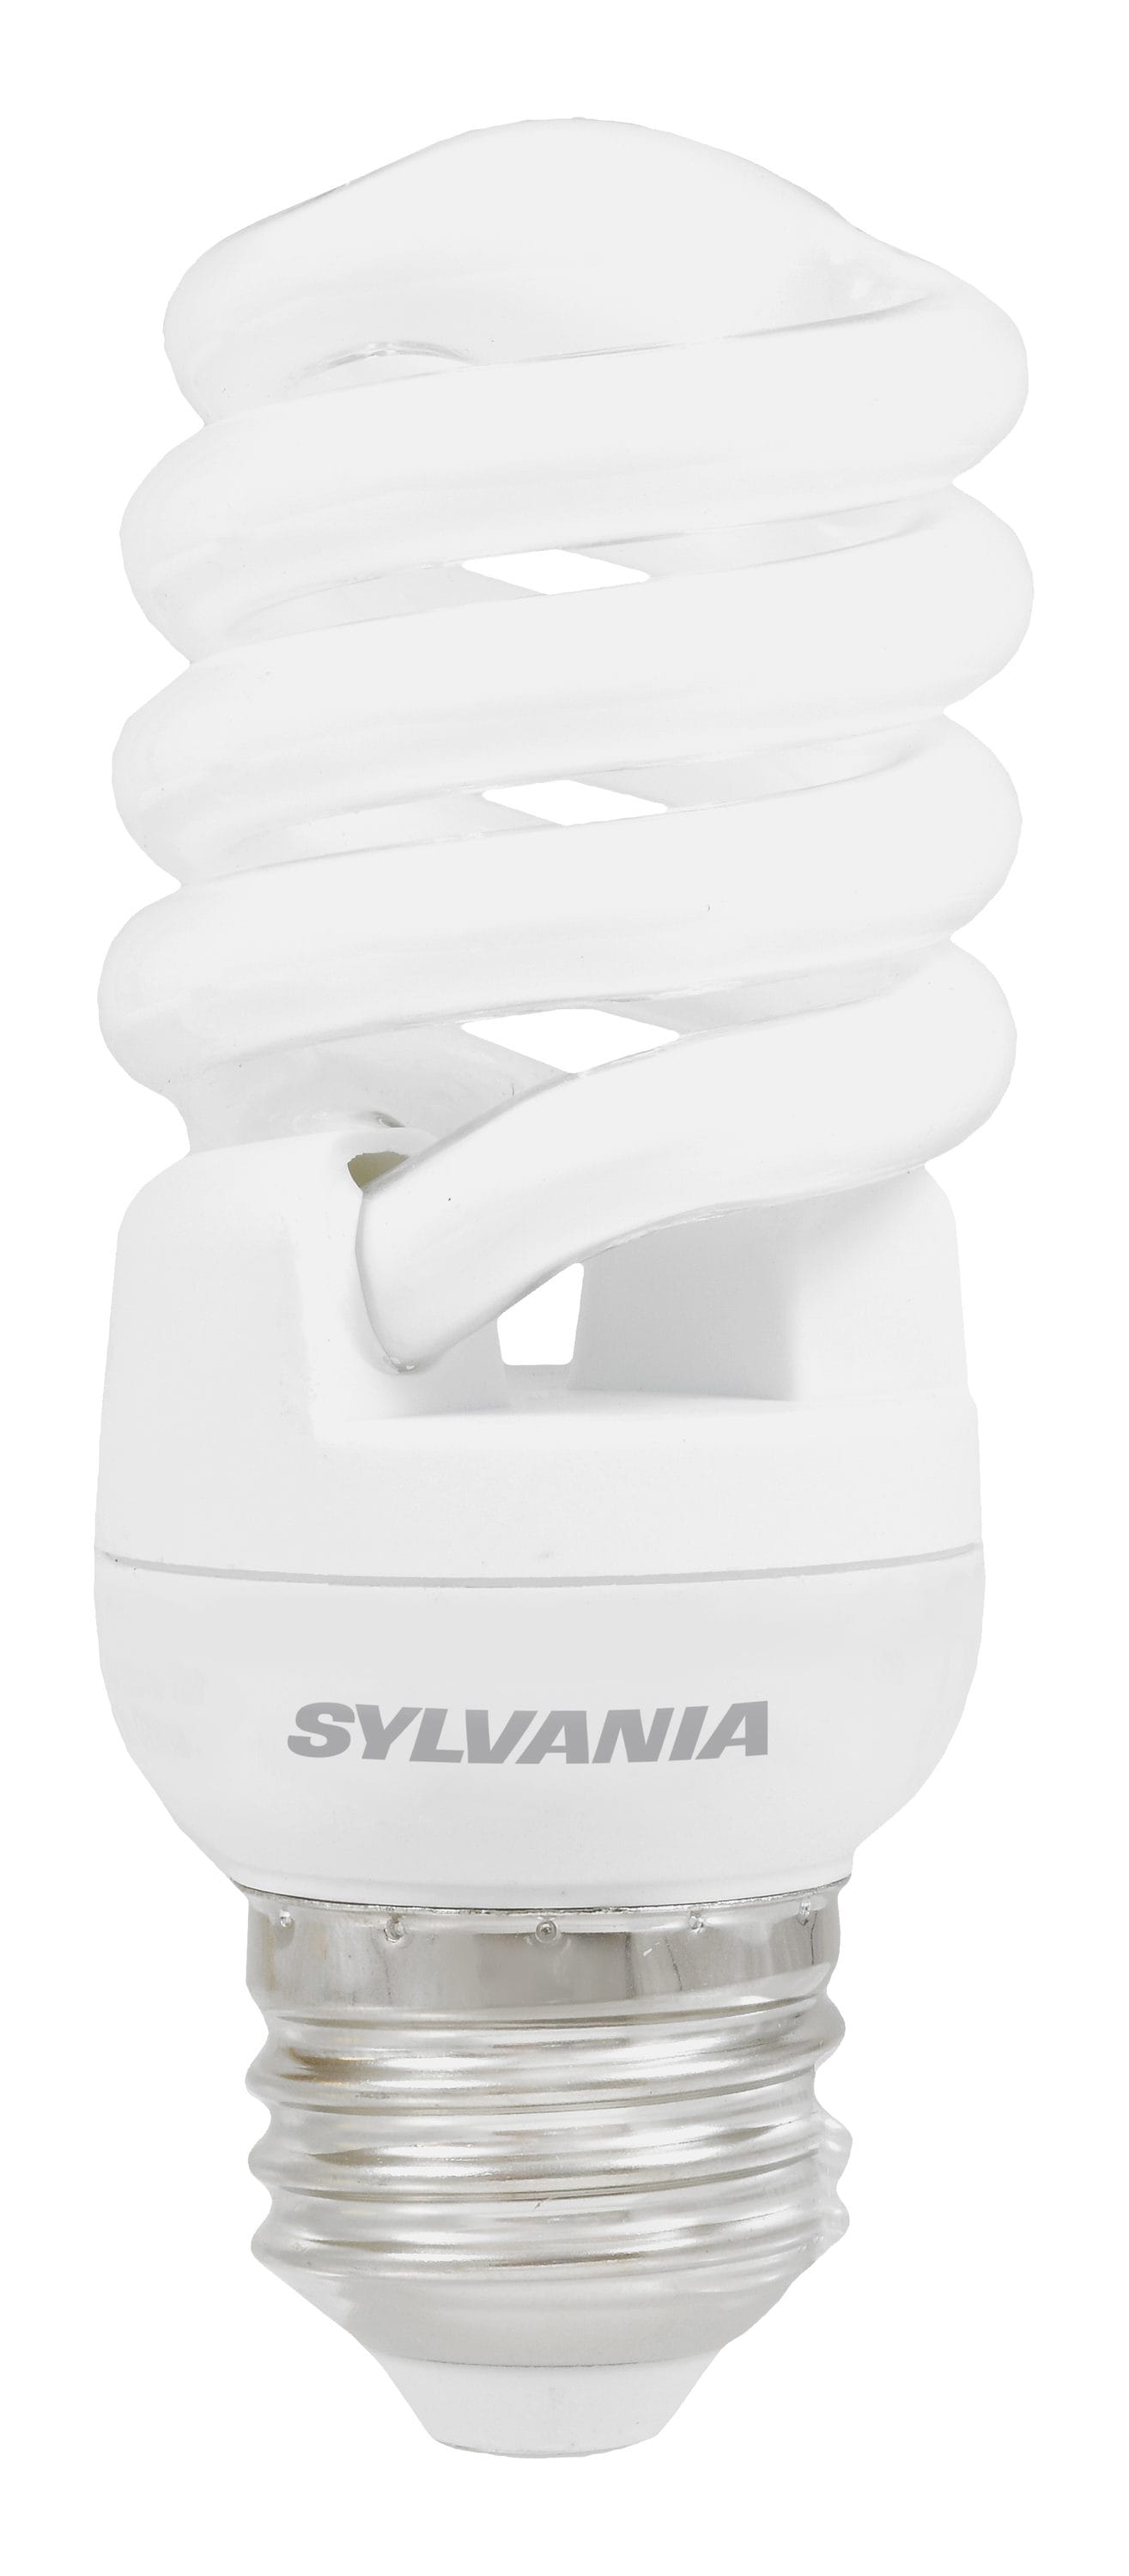 10 12 8 6 or 4 Sylvania 3U Light Bulbs 5w/7w or 9w Warm White Mini Small Compact 